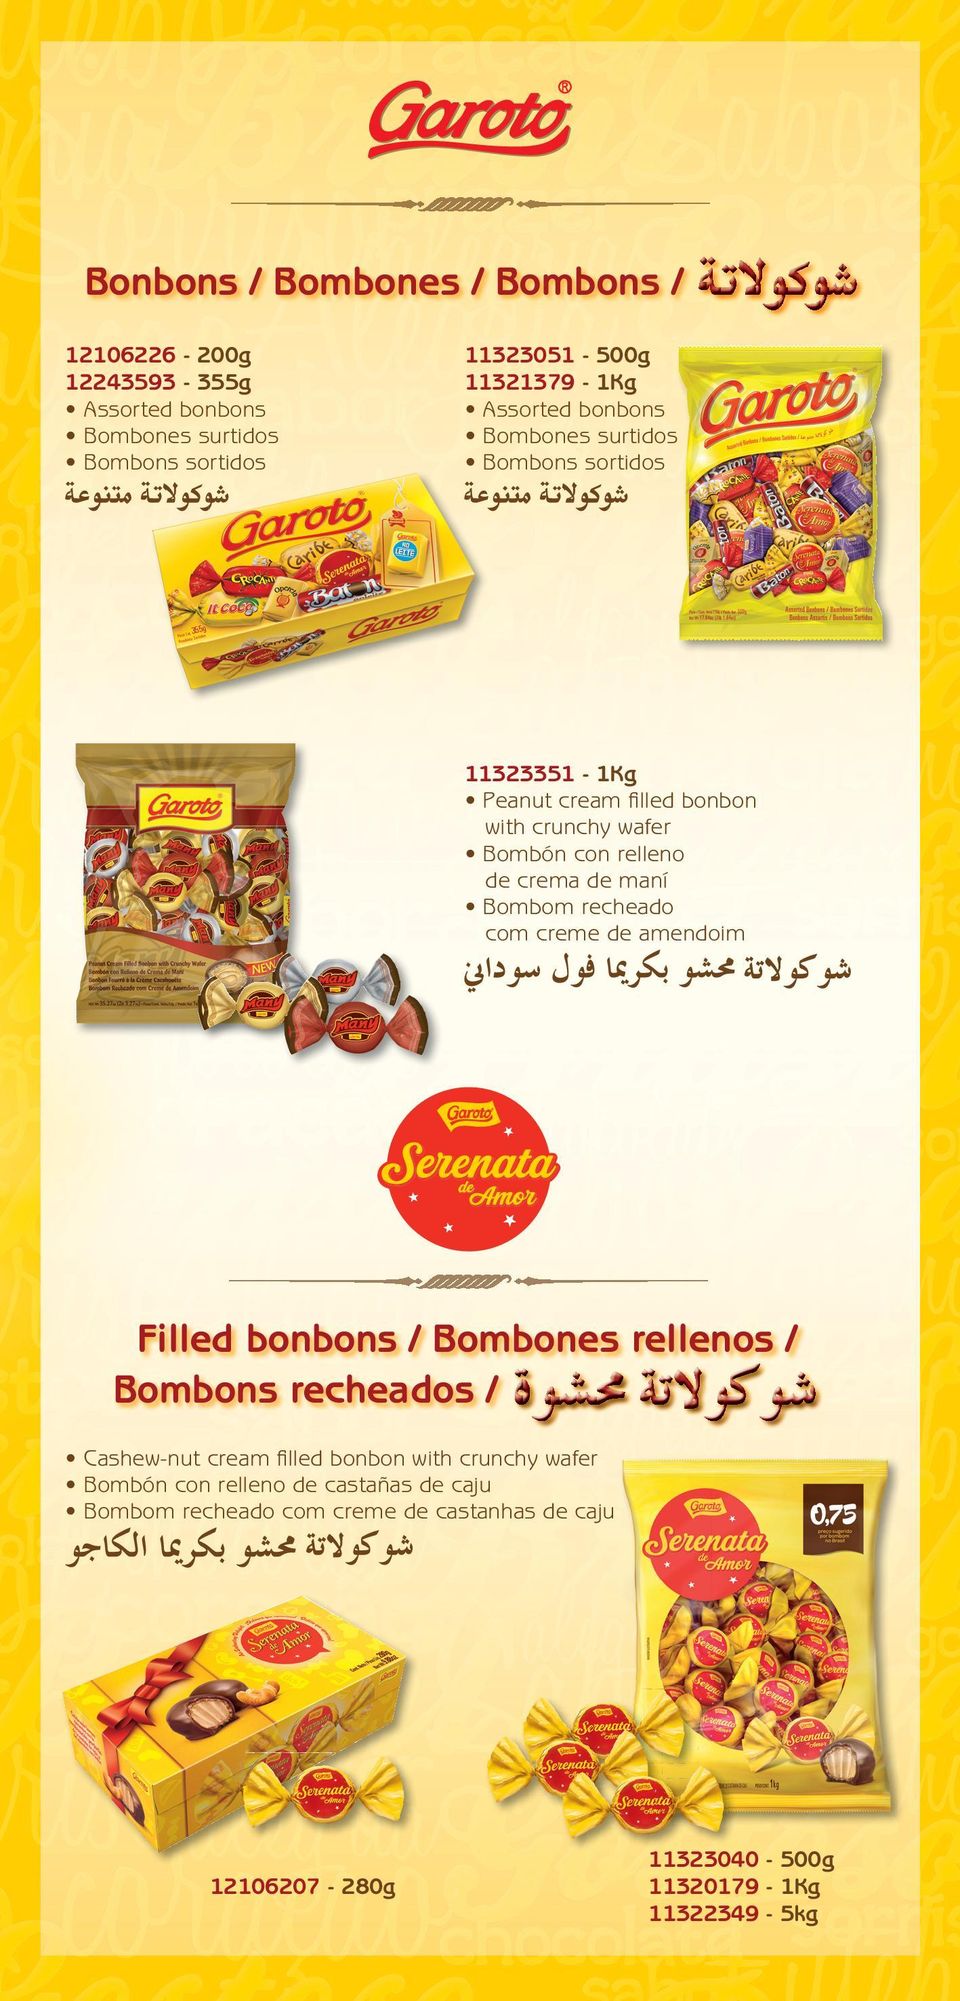 maní Bombom recheado com creme de amendoim Filled bonbons / Bombones rellenos / Bombons recheados / Cashew-nut cream ﬁlled bonbon with